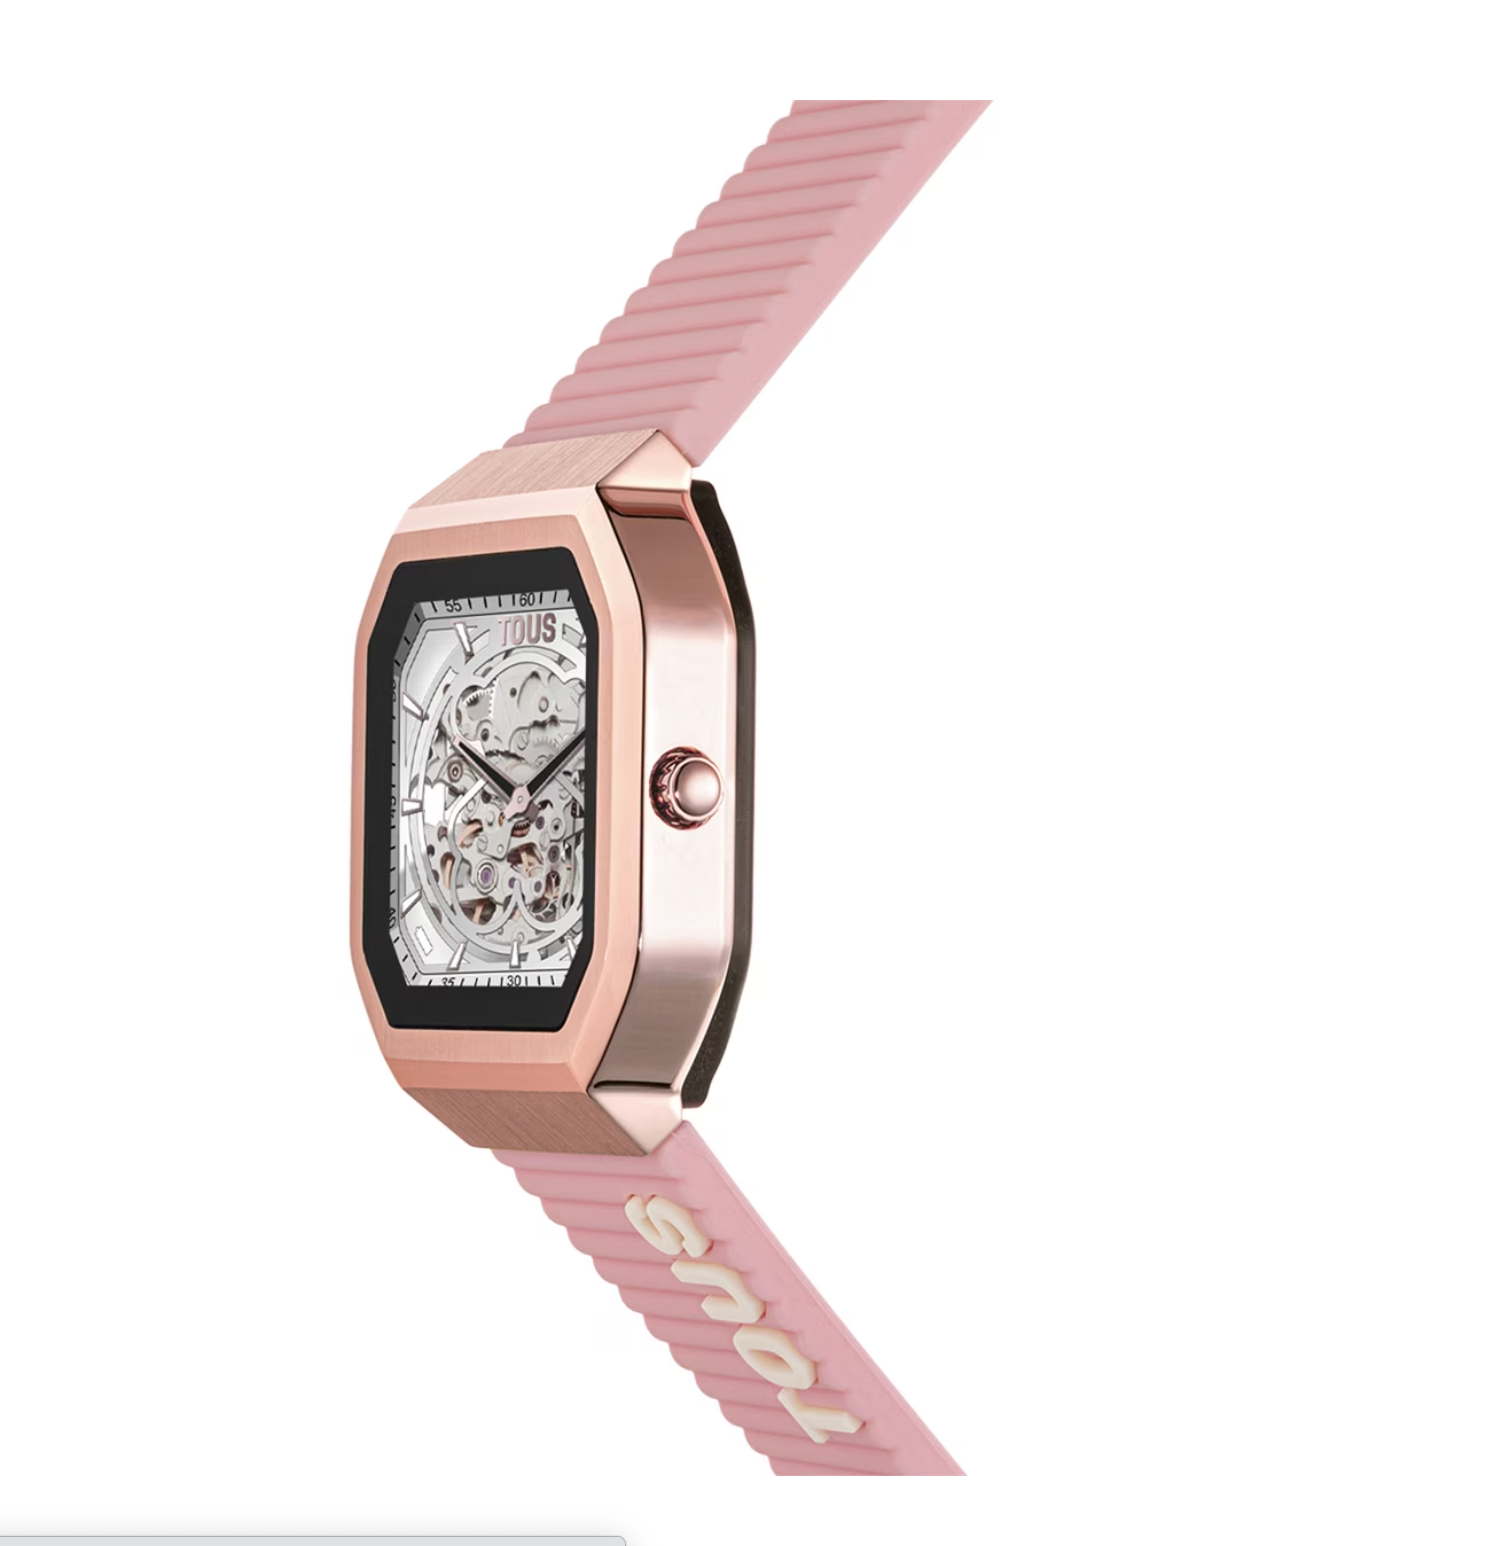 Reloj TOUS smartwatch B-Connect silicona rosa